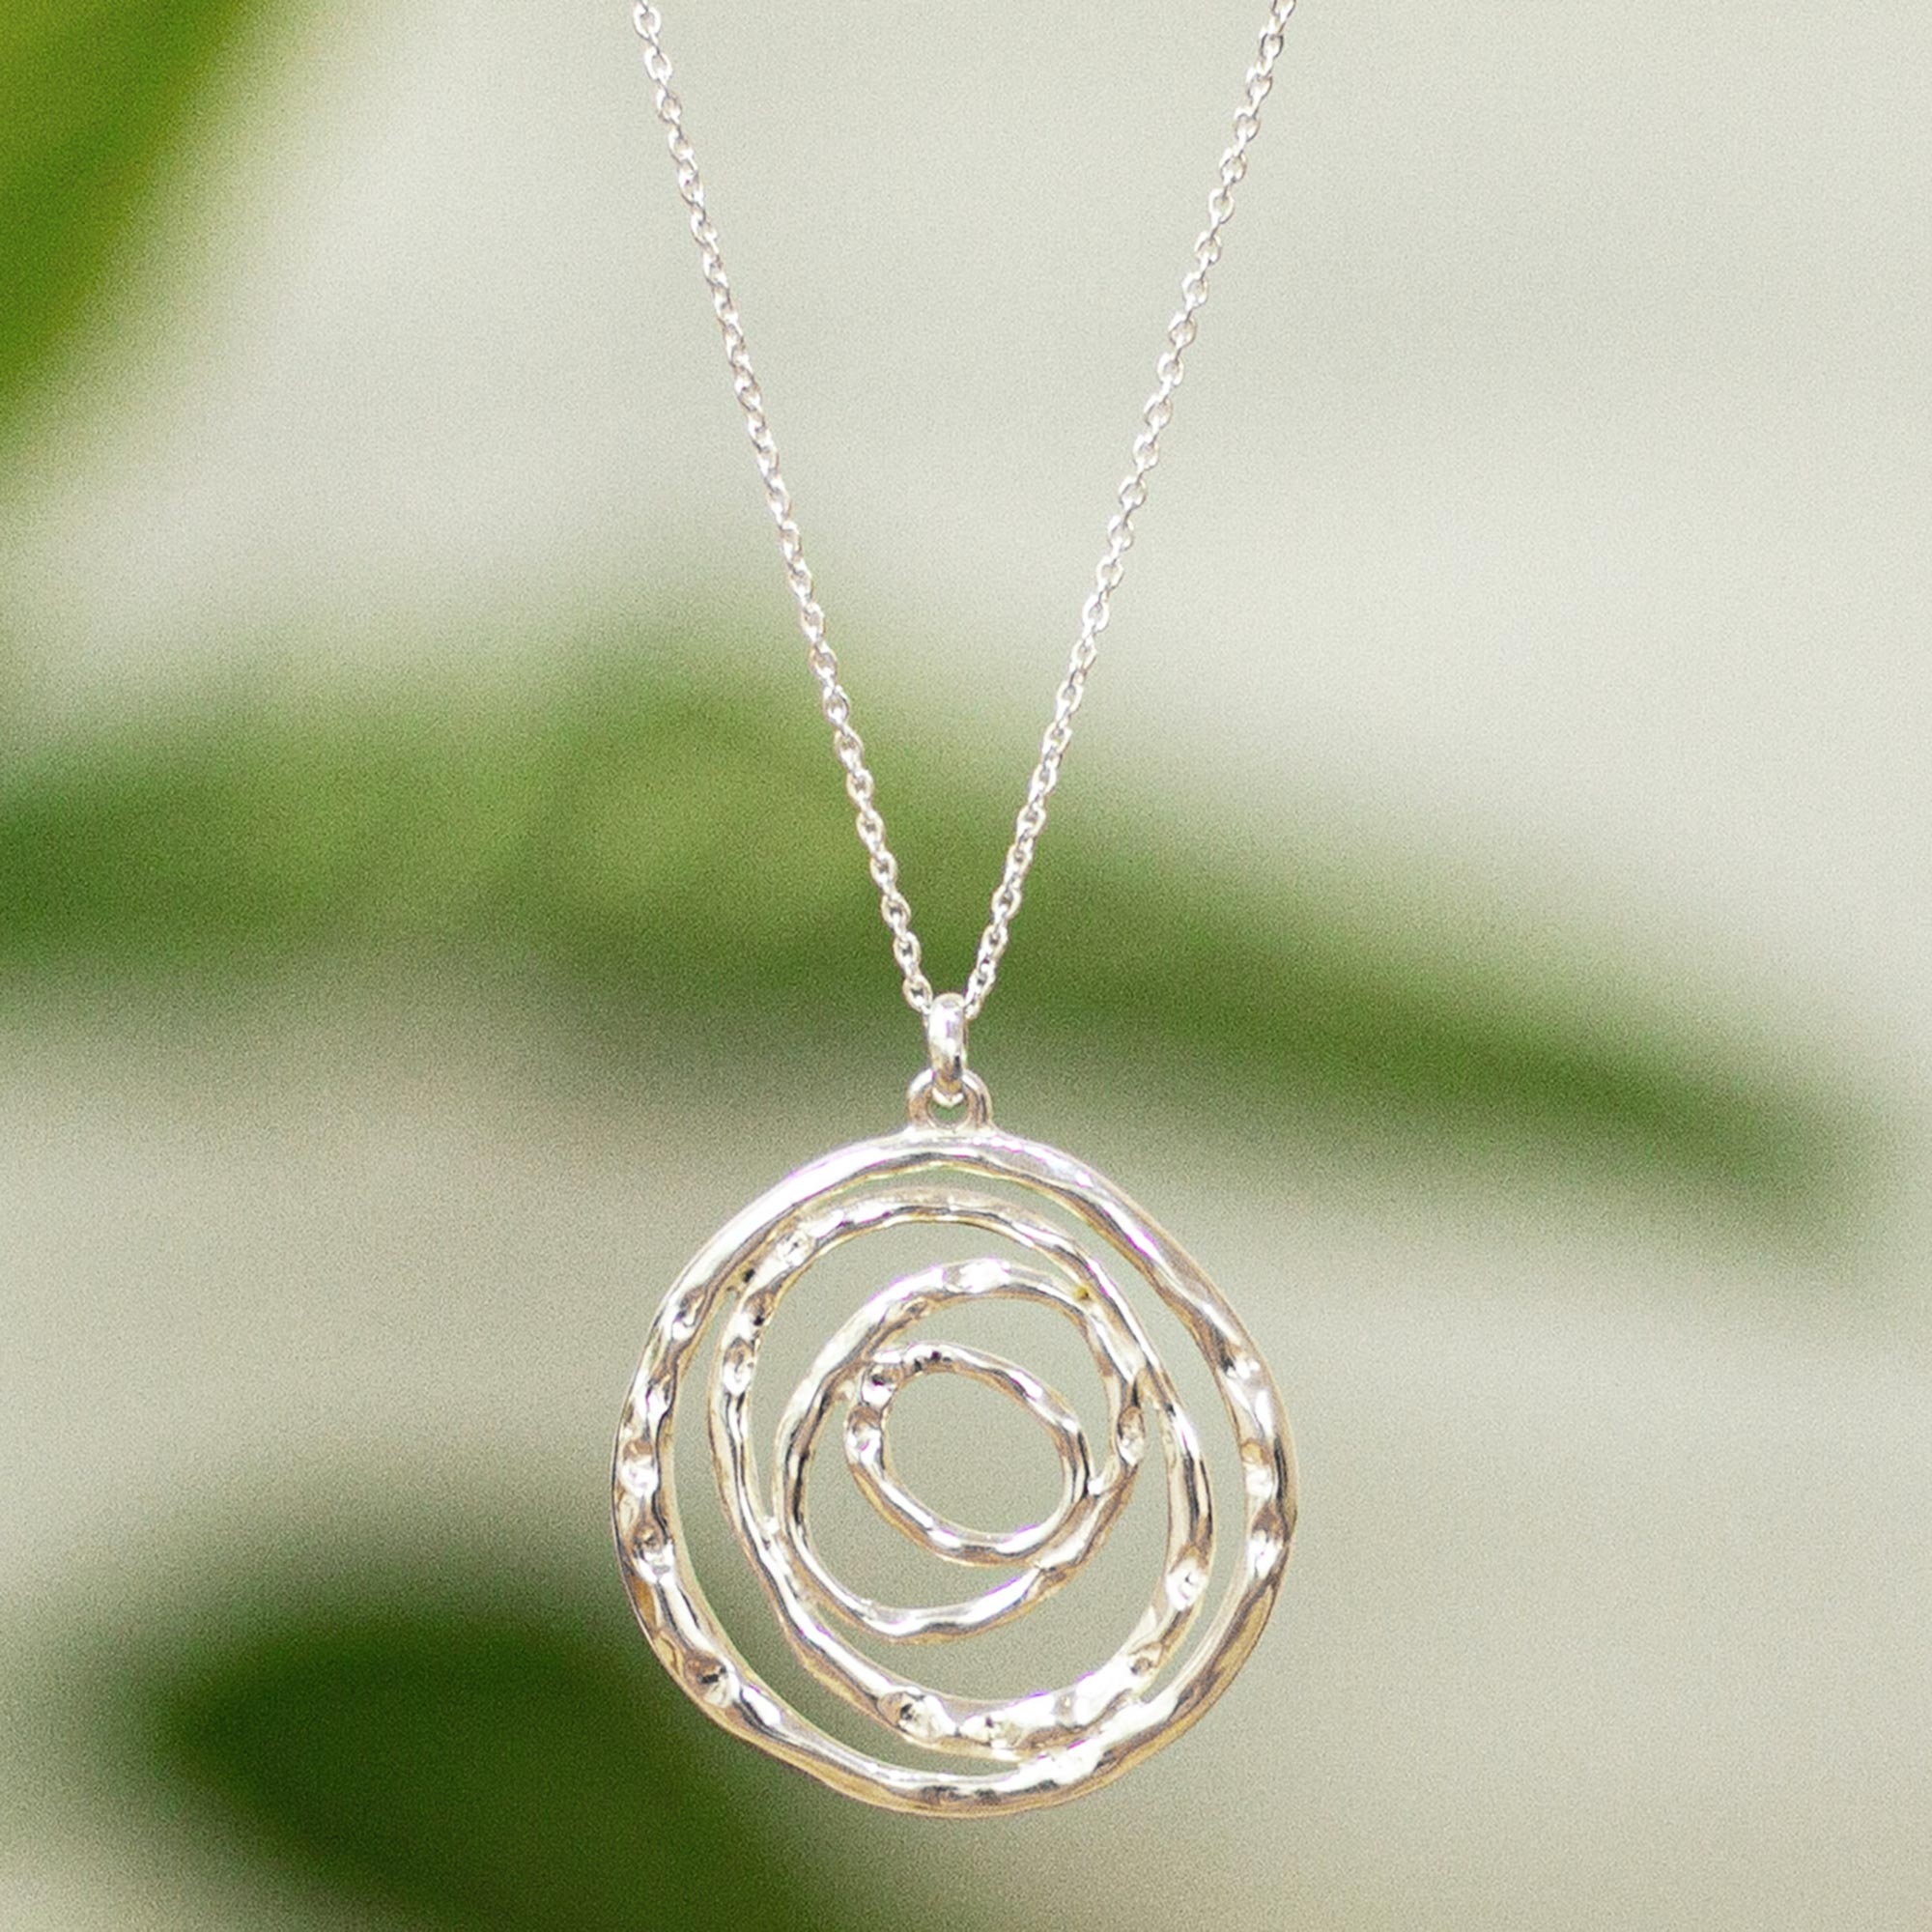 Spiral Pendant Necklace Swirls, Jewelry Making Findings